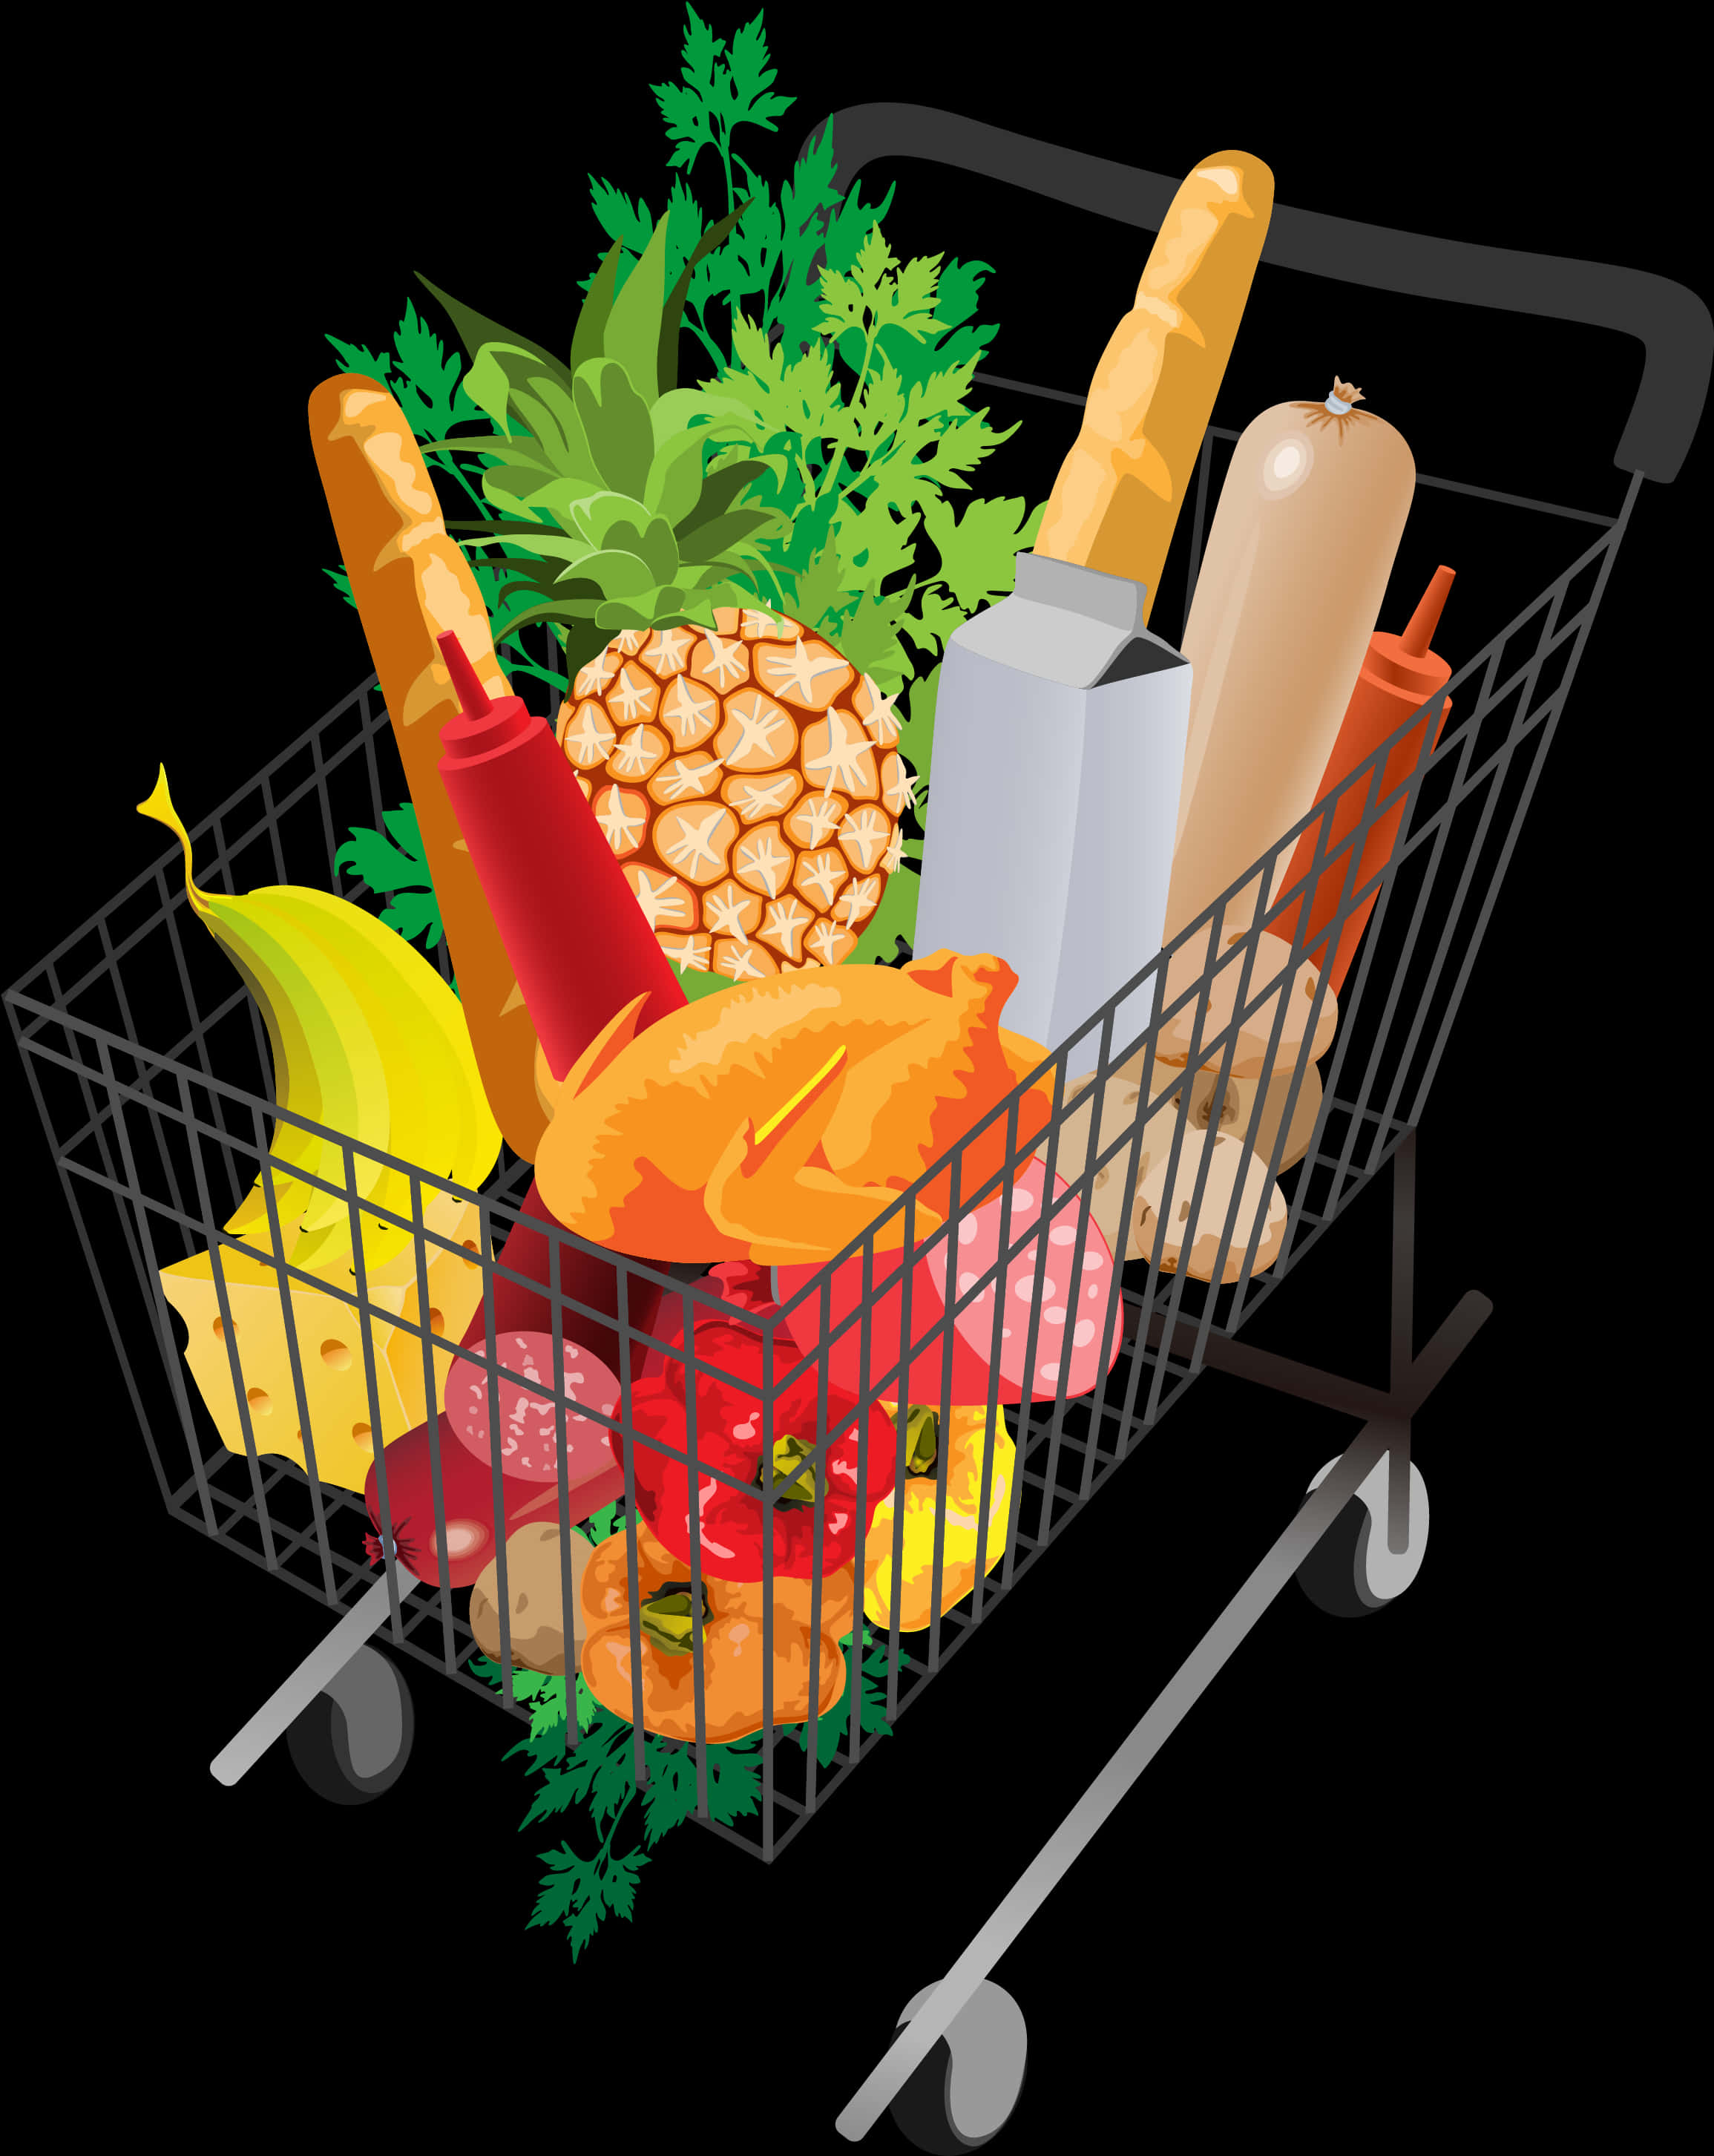 Grocery Shopping Cart Fullof Food Items.jpg PNG